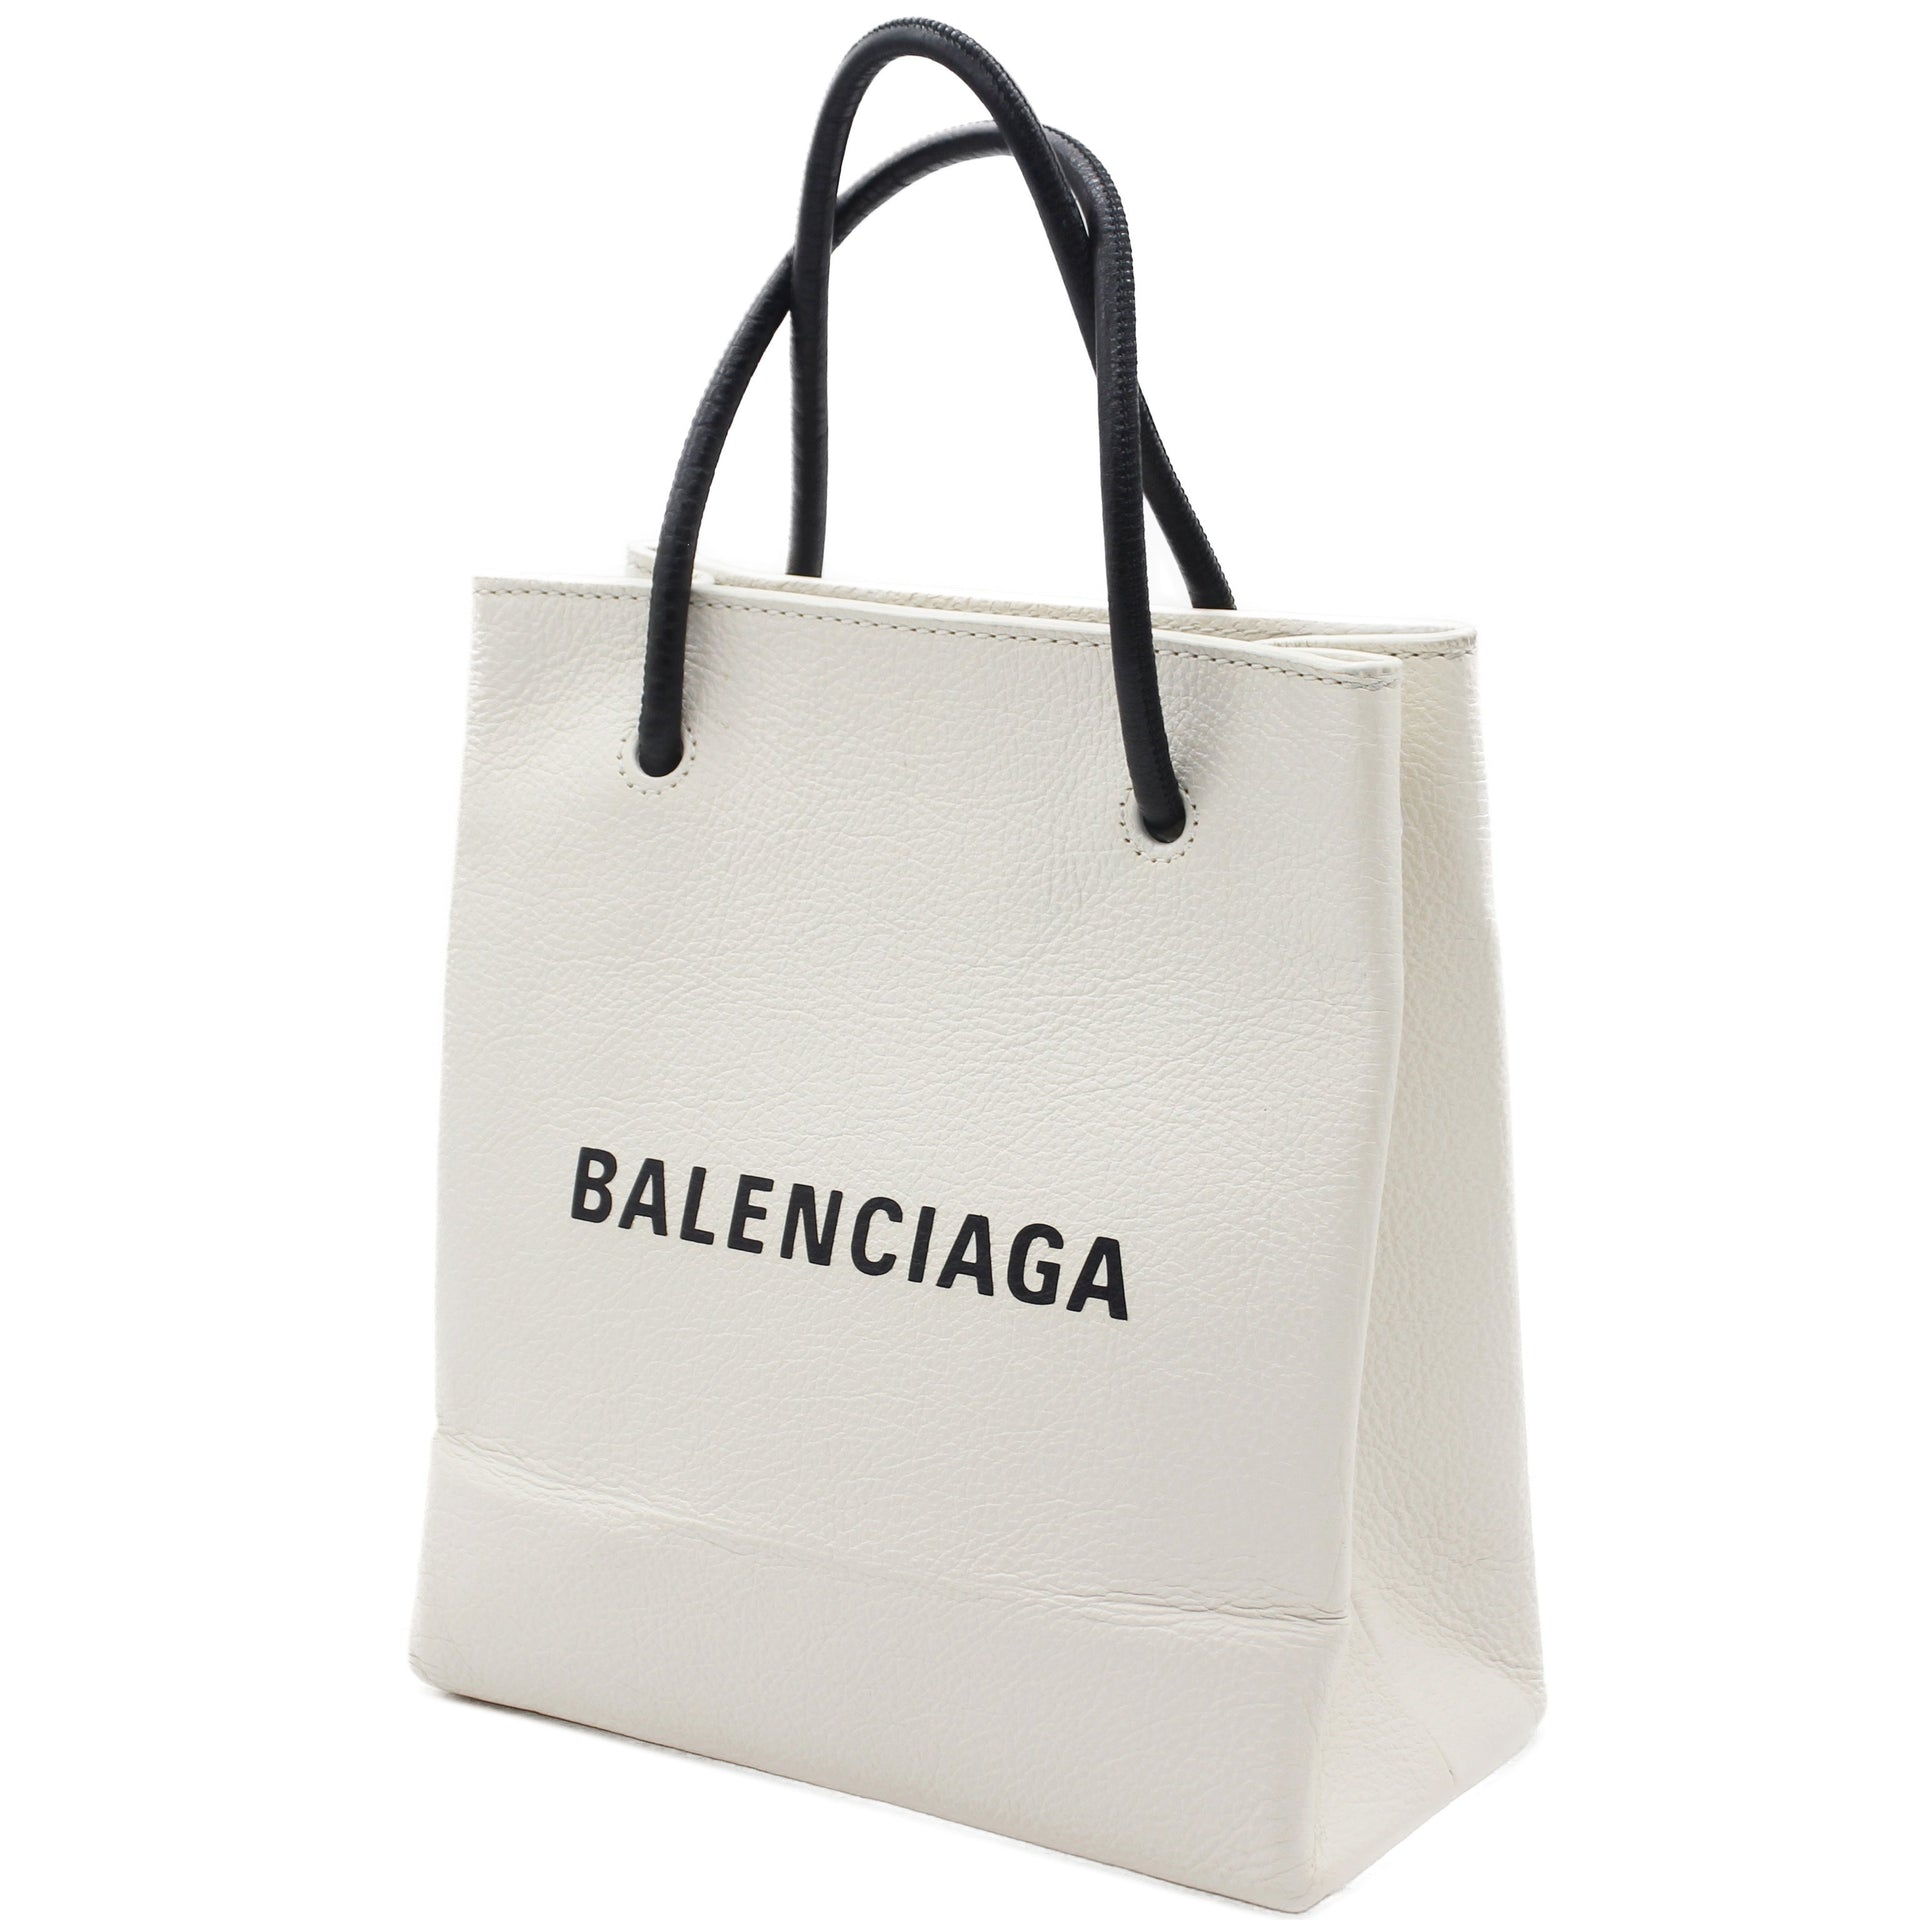 Balenciaga Graffiti Bag White Italy SAVE 59  falkinnismaris